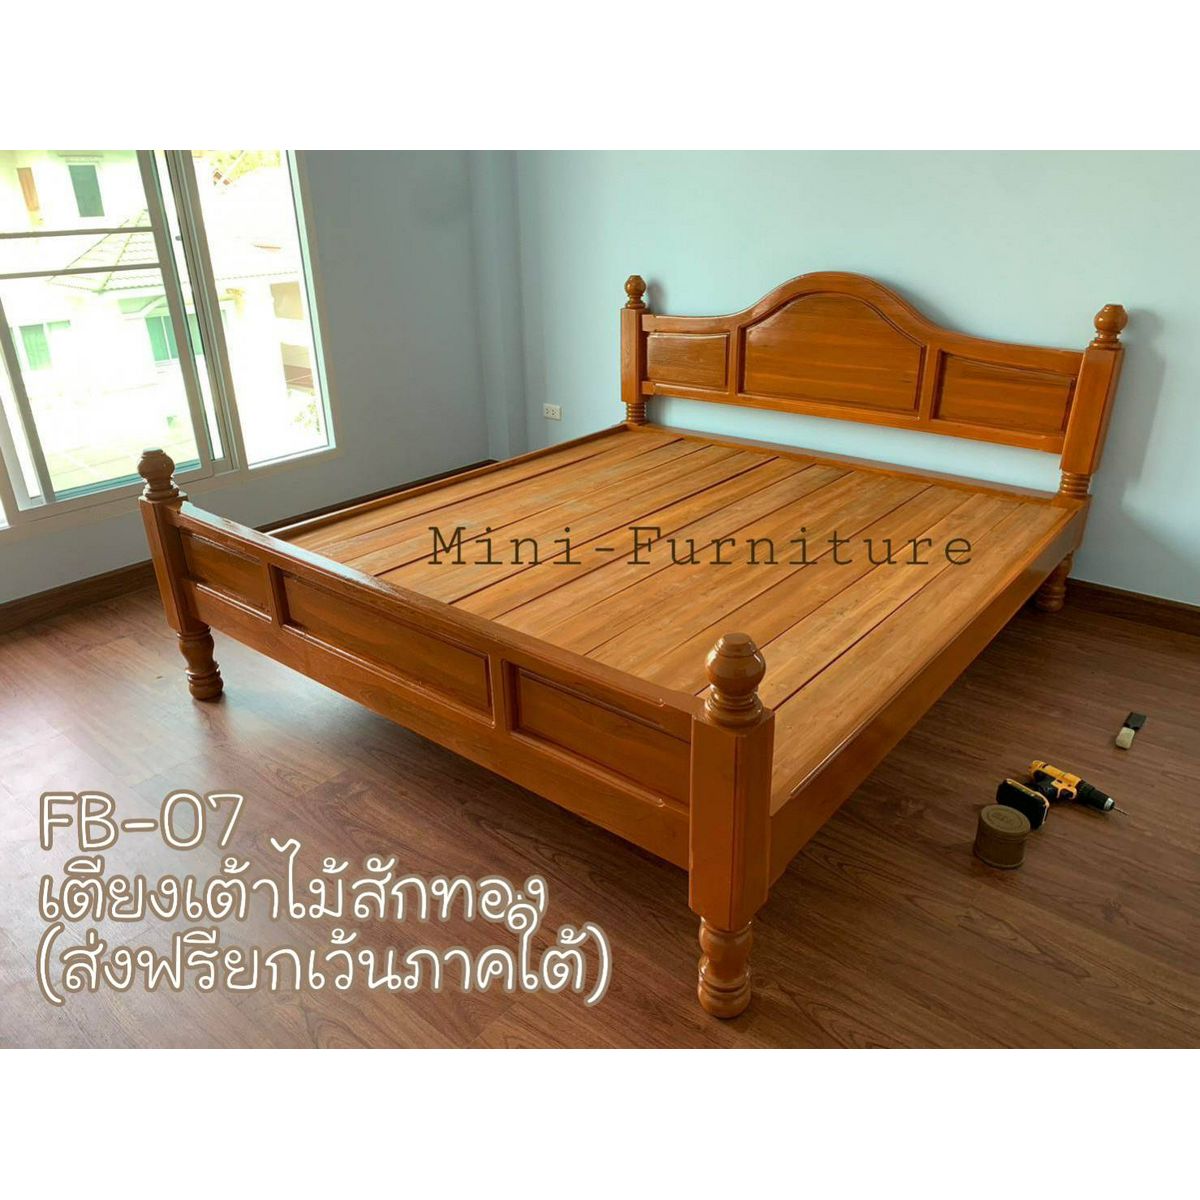 Mini Furniture เตียงเต้า ส้มสักทอง 6ฟุต